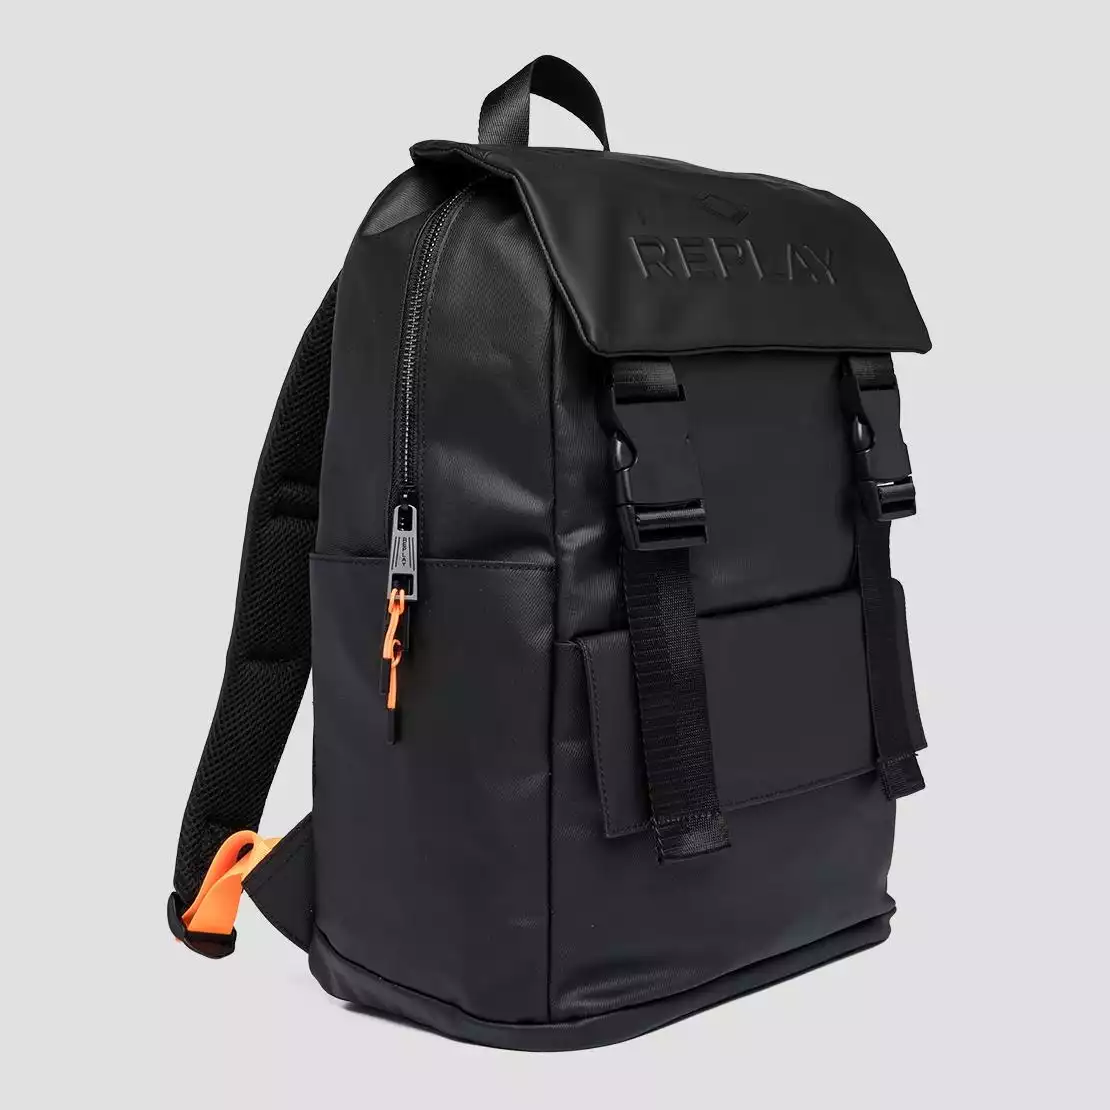 Nahrbtnik / Backpack